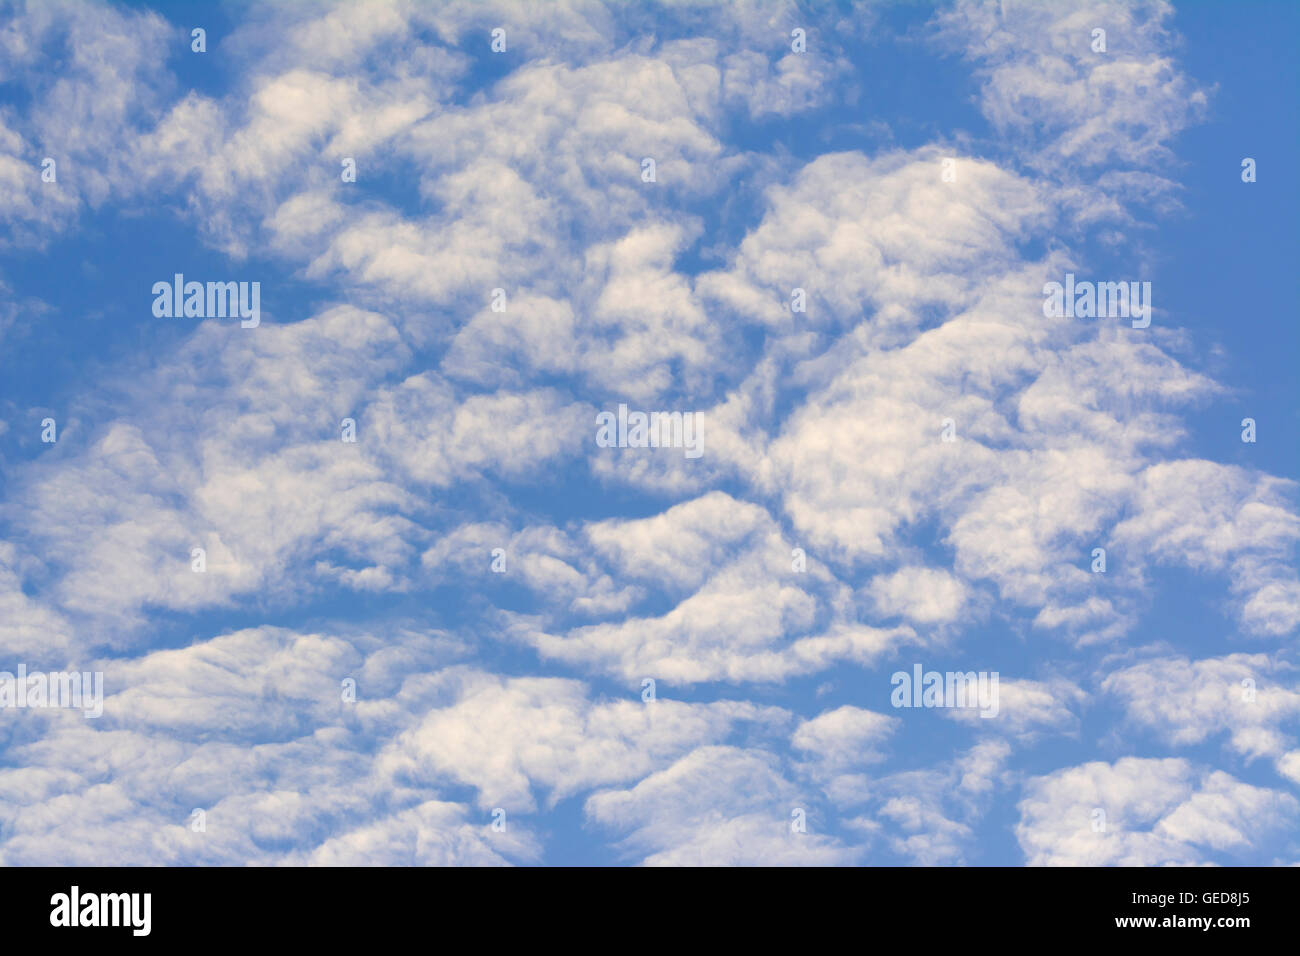 Altocumulus clouds against blue sky. Stock Photo